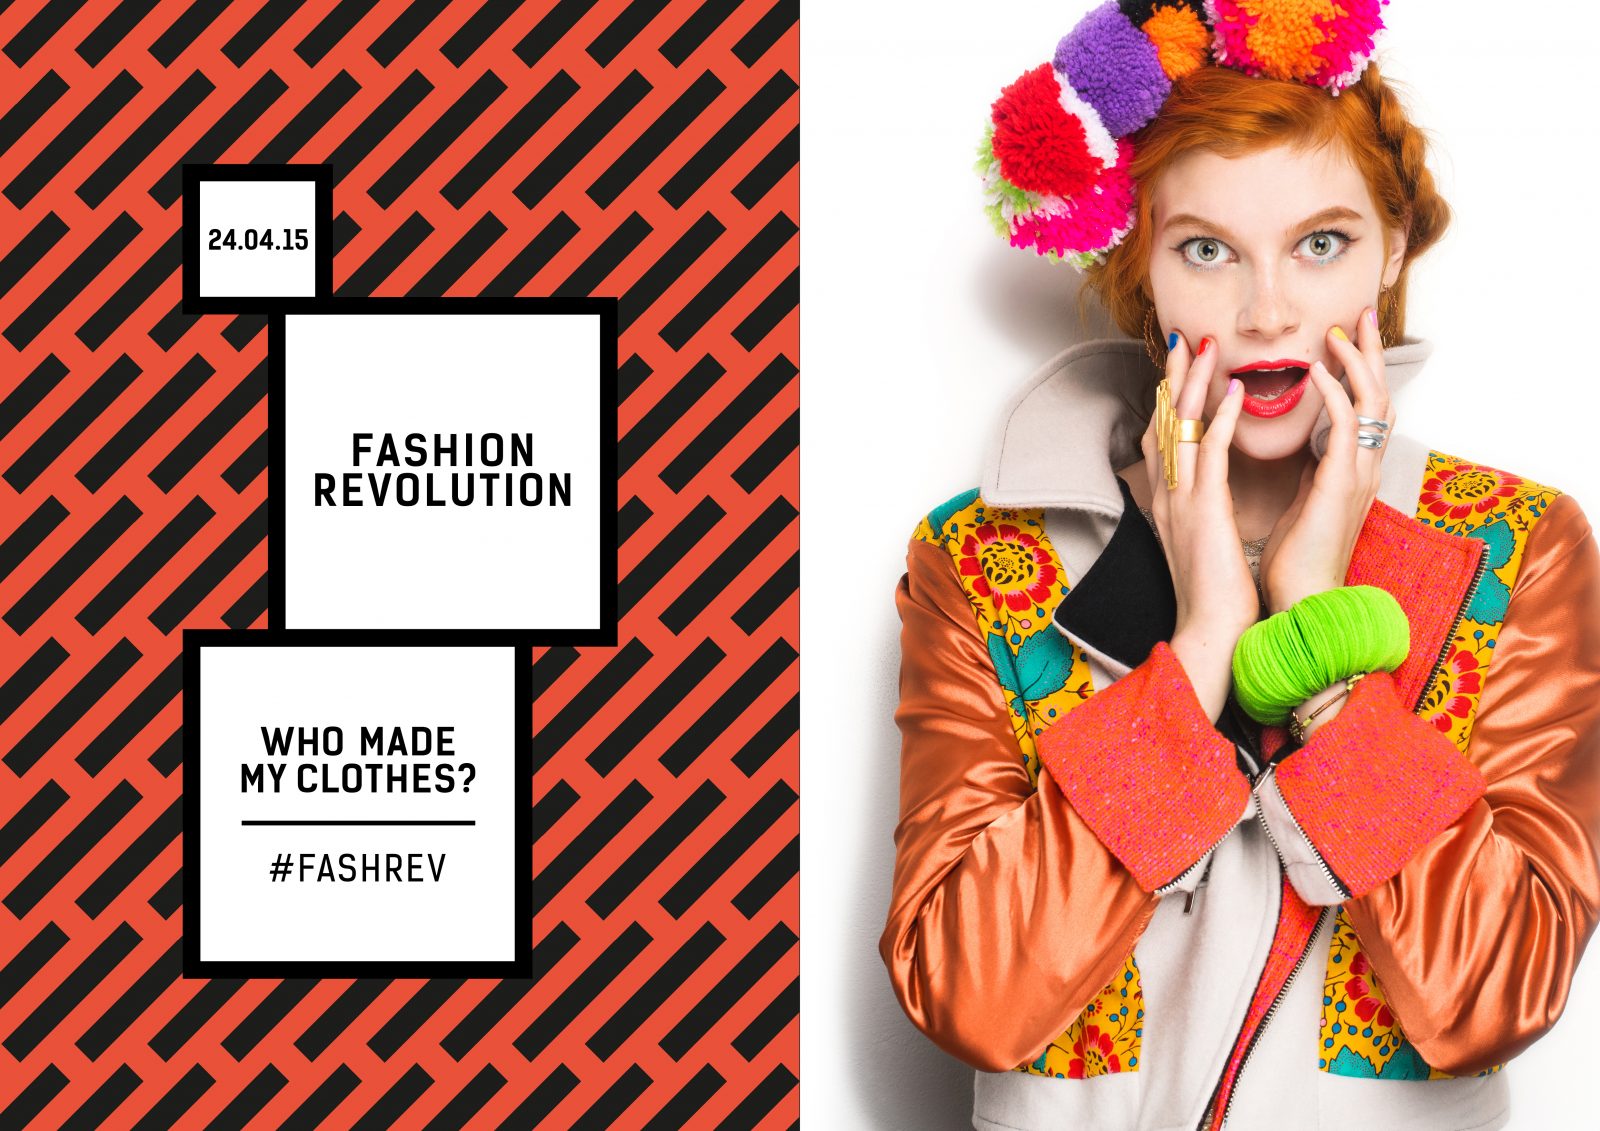 Fashion Revolution Day Poster 24 april 2013 Rana Plaza